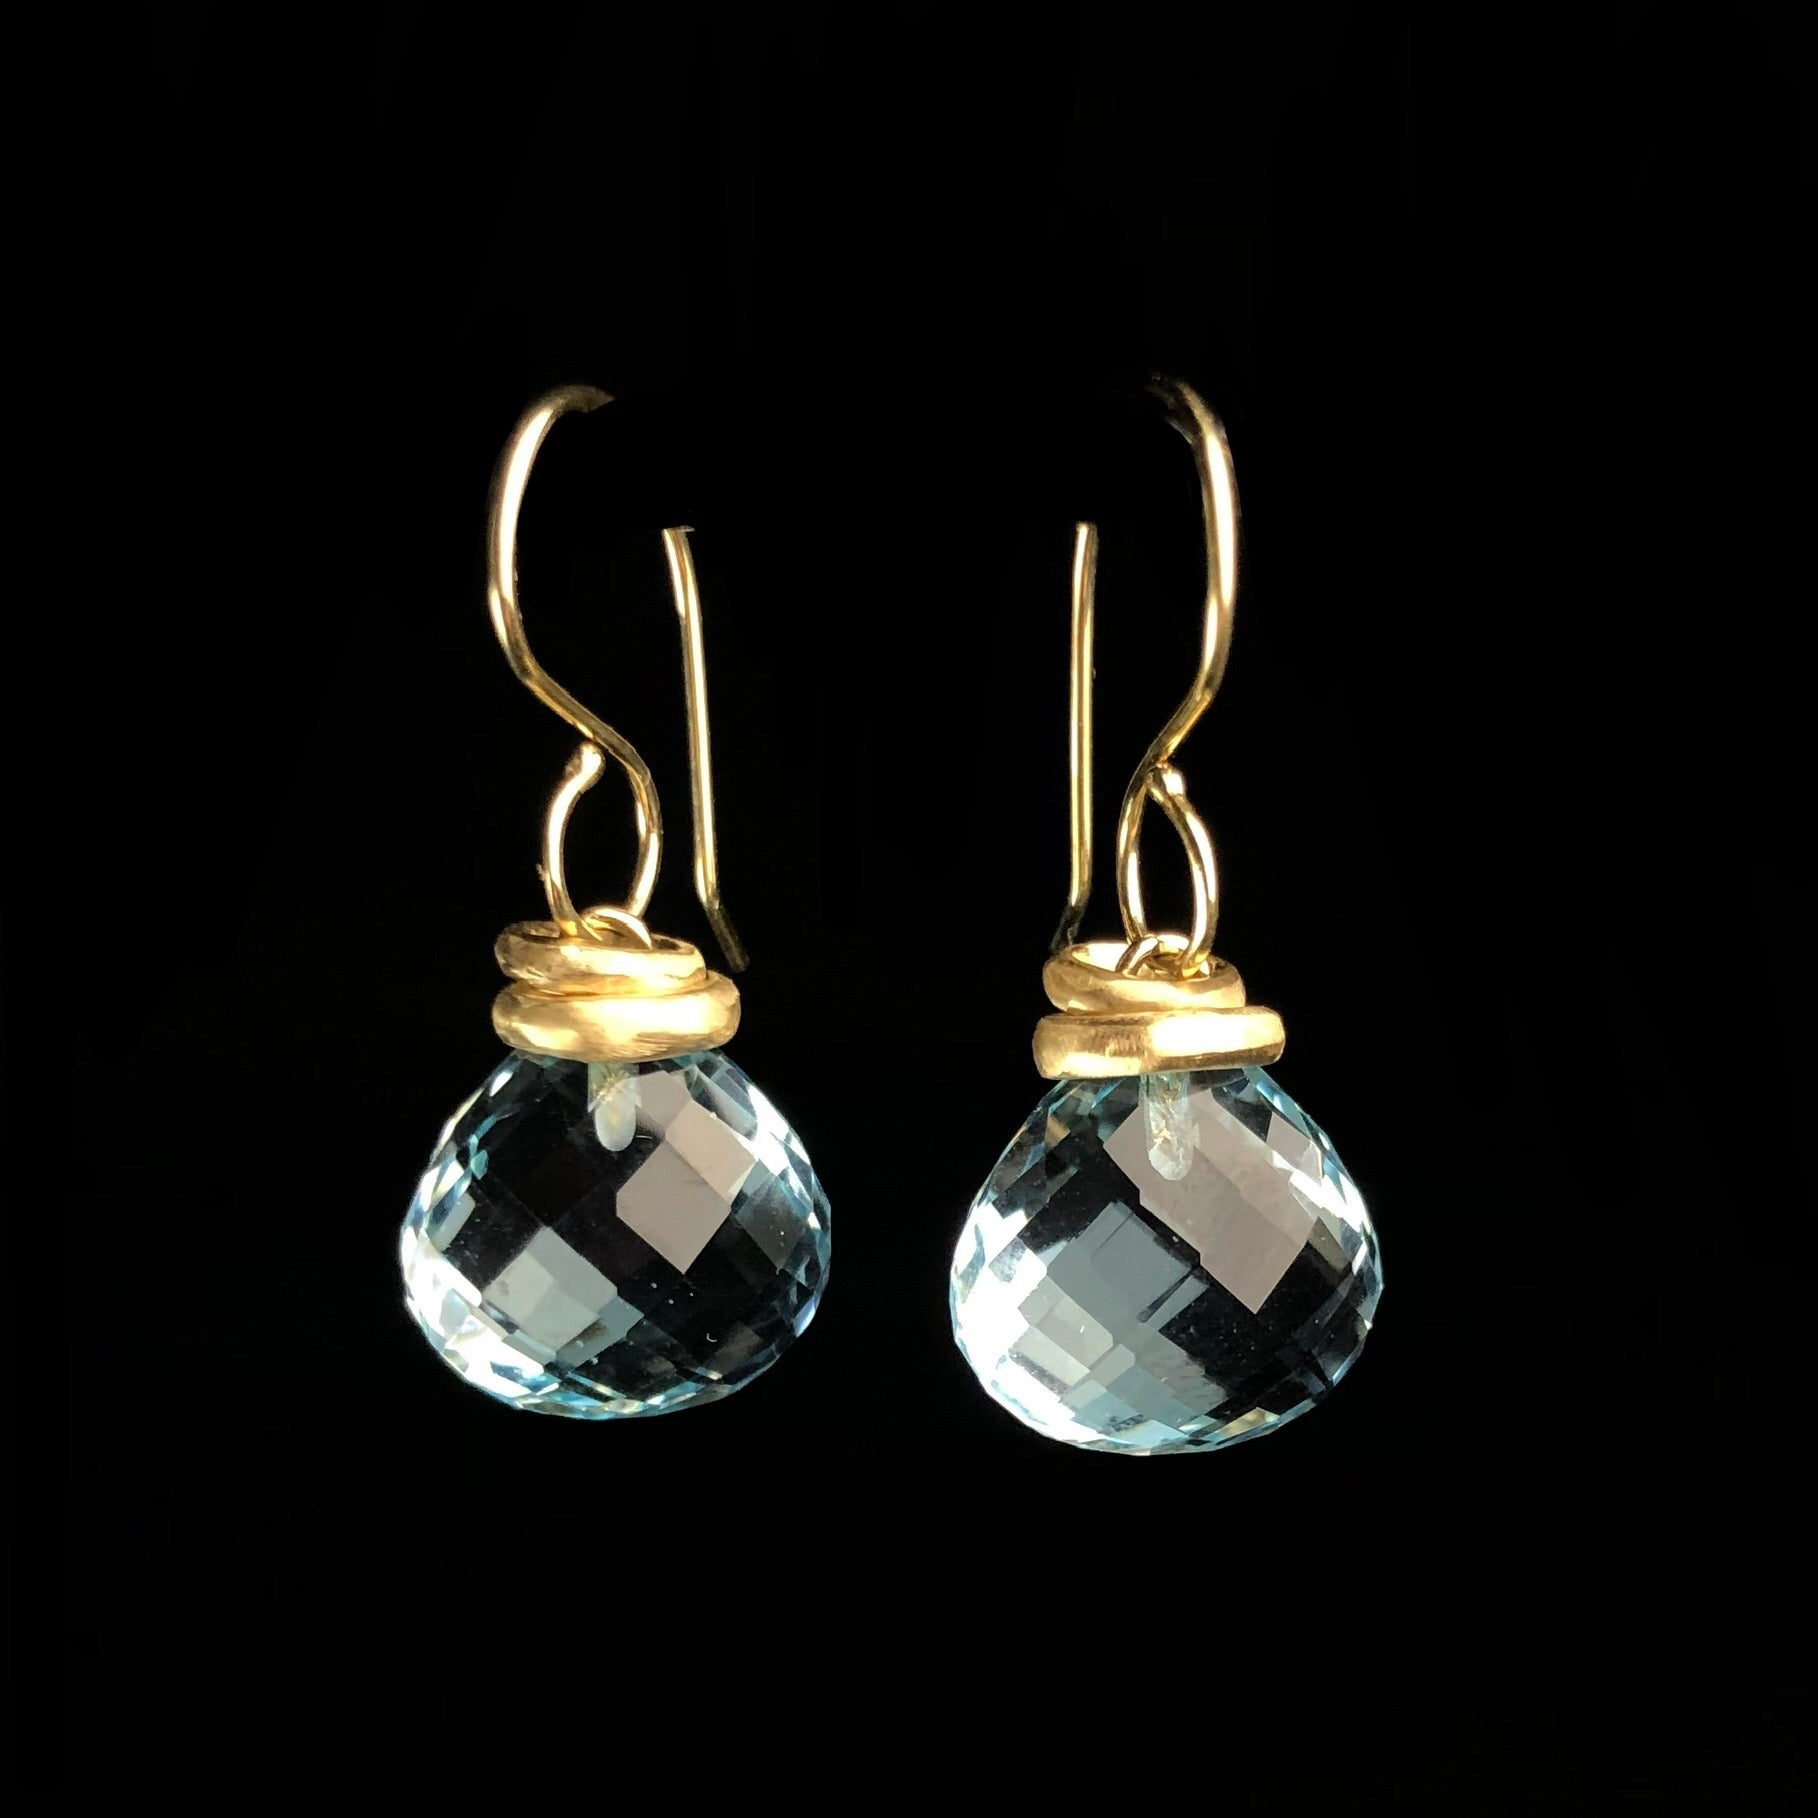 Transparent light blue stones hanging on gold earring hooks